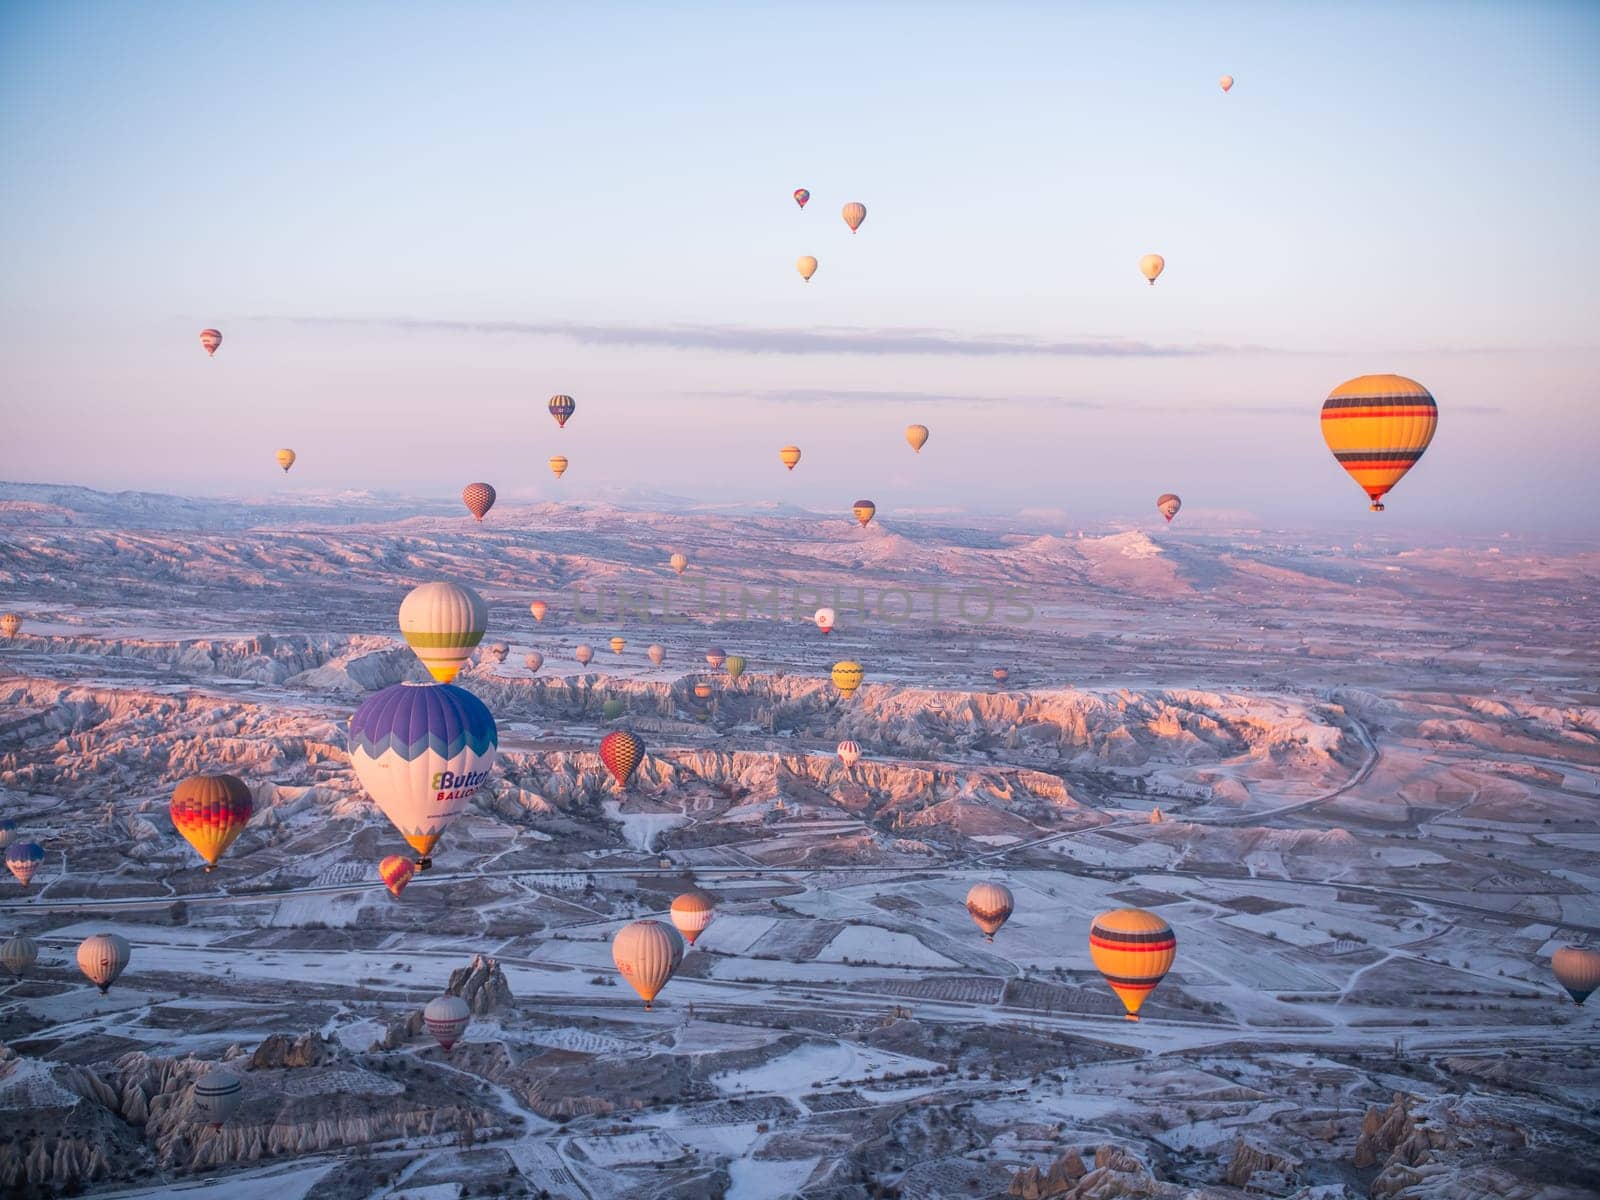 Goreme, Turkey - January 11, 2020: Colorful balloons over volcanic rocks in Cappadocia. Turkey. by DovidPro